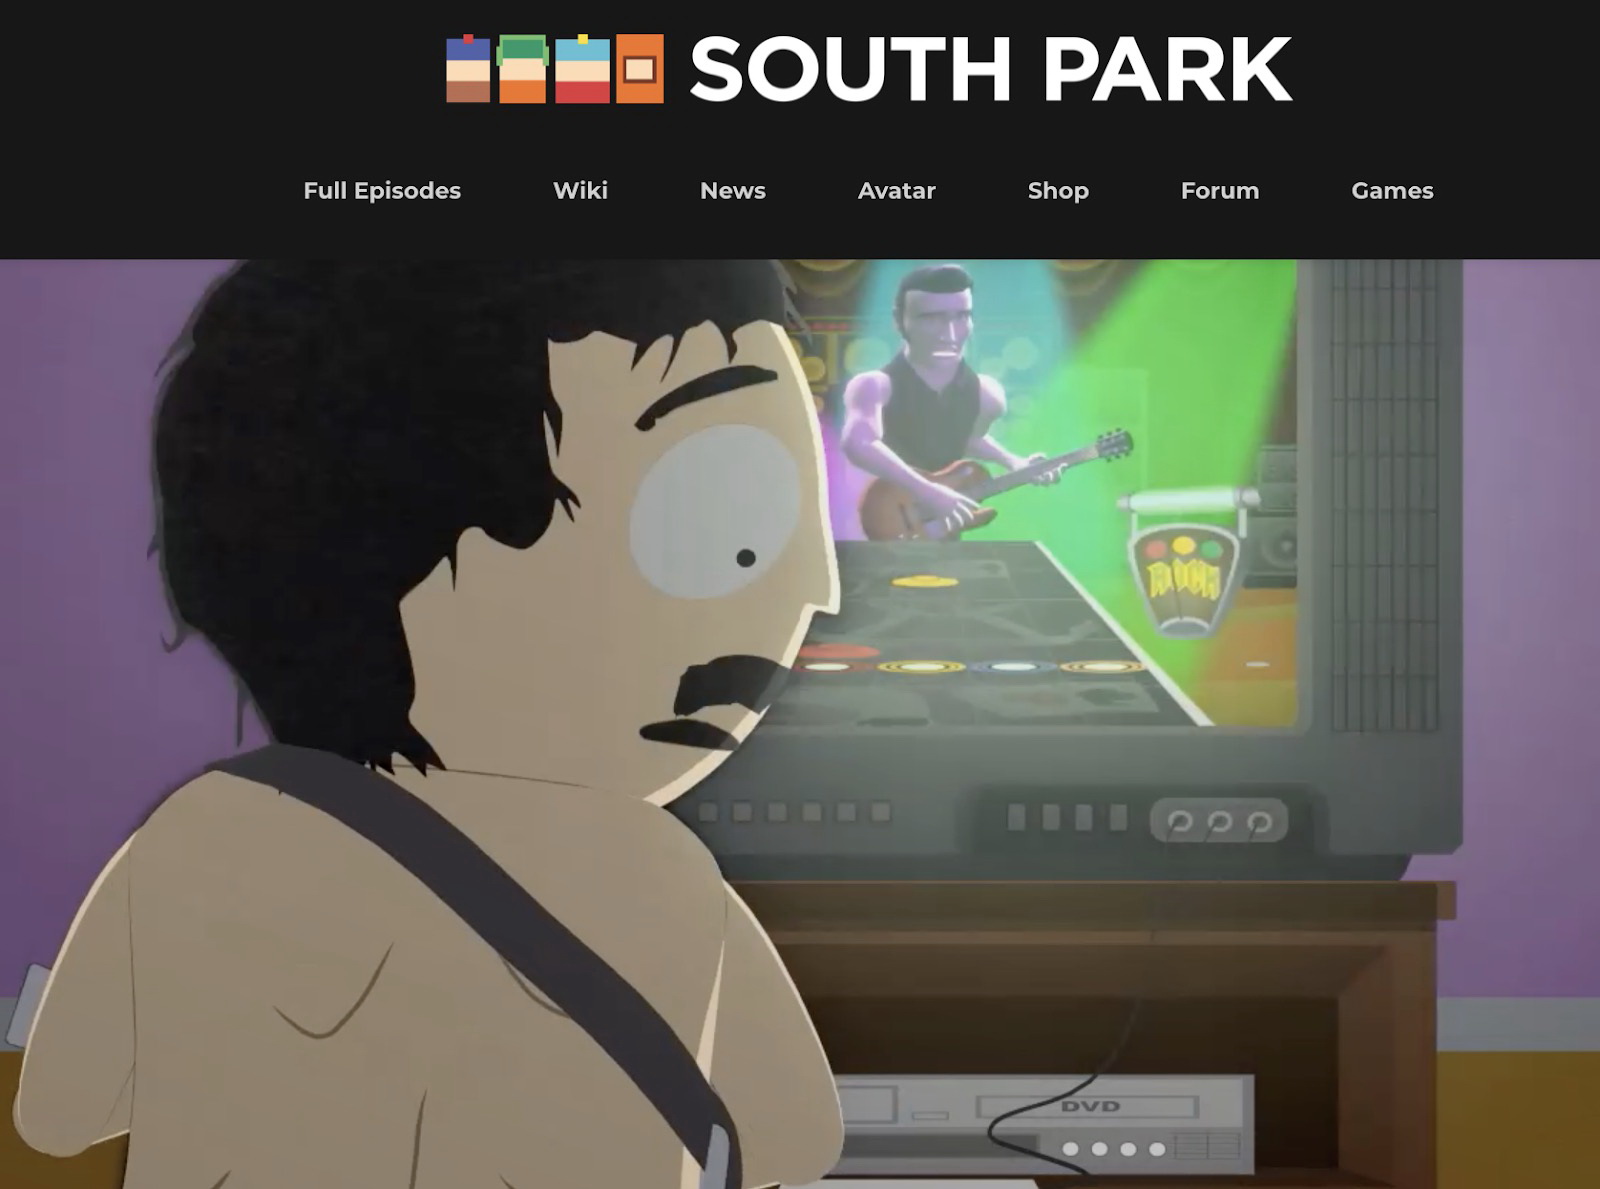  South-Park-Studios-Video-Won't-Play 